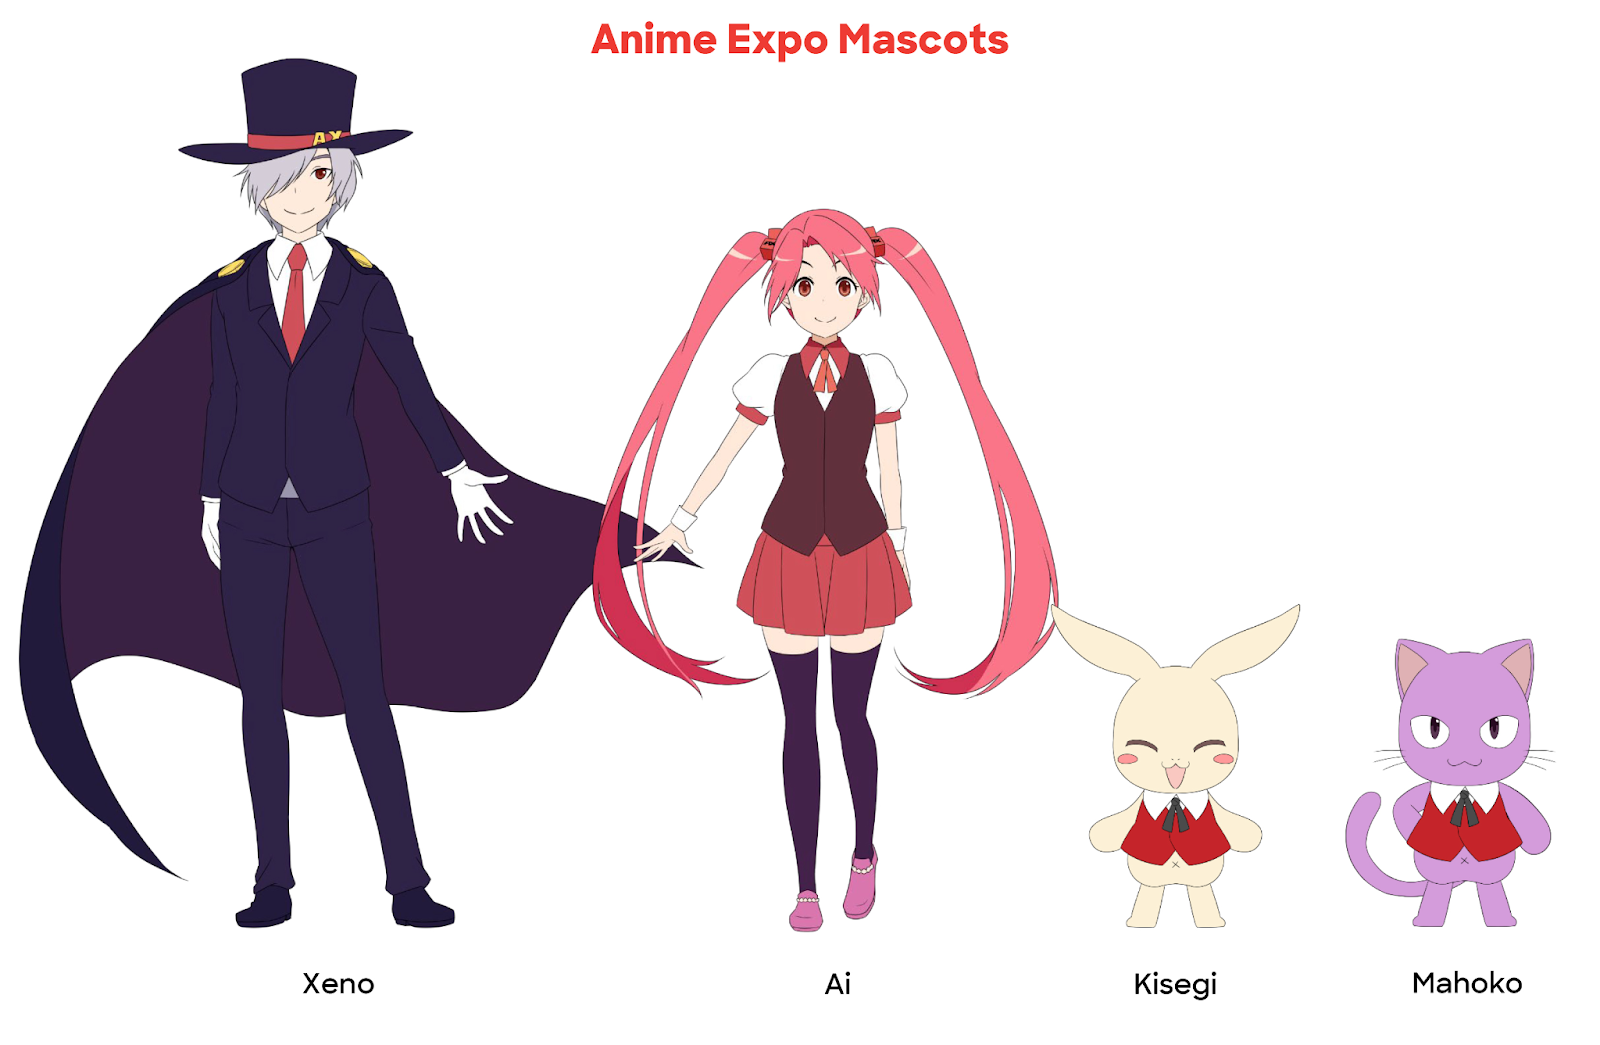 Anime Expo Mascots: Xeno, Ai, Kisegi, and Mahoko